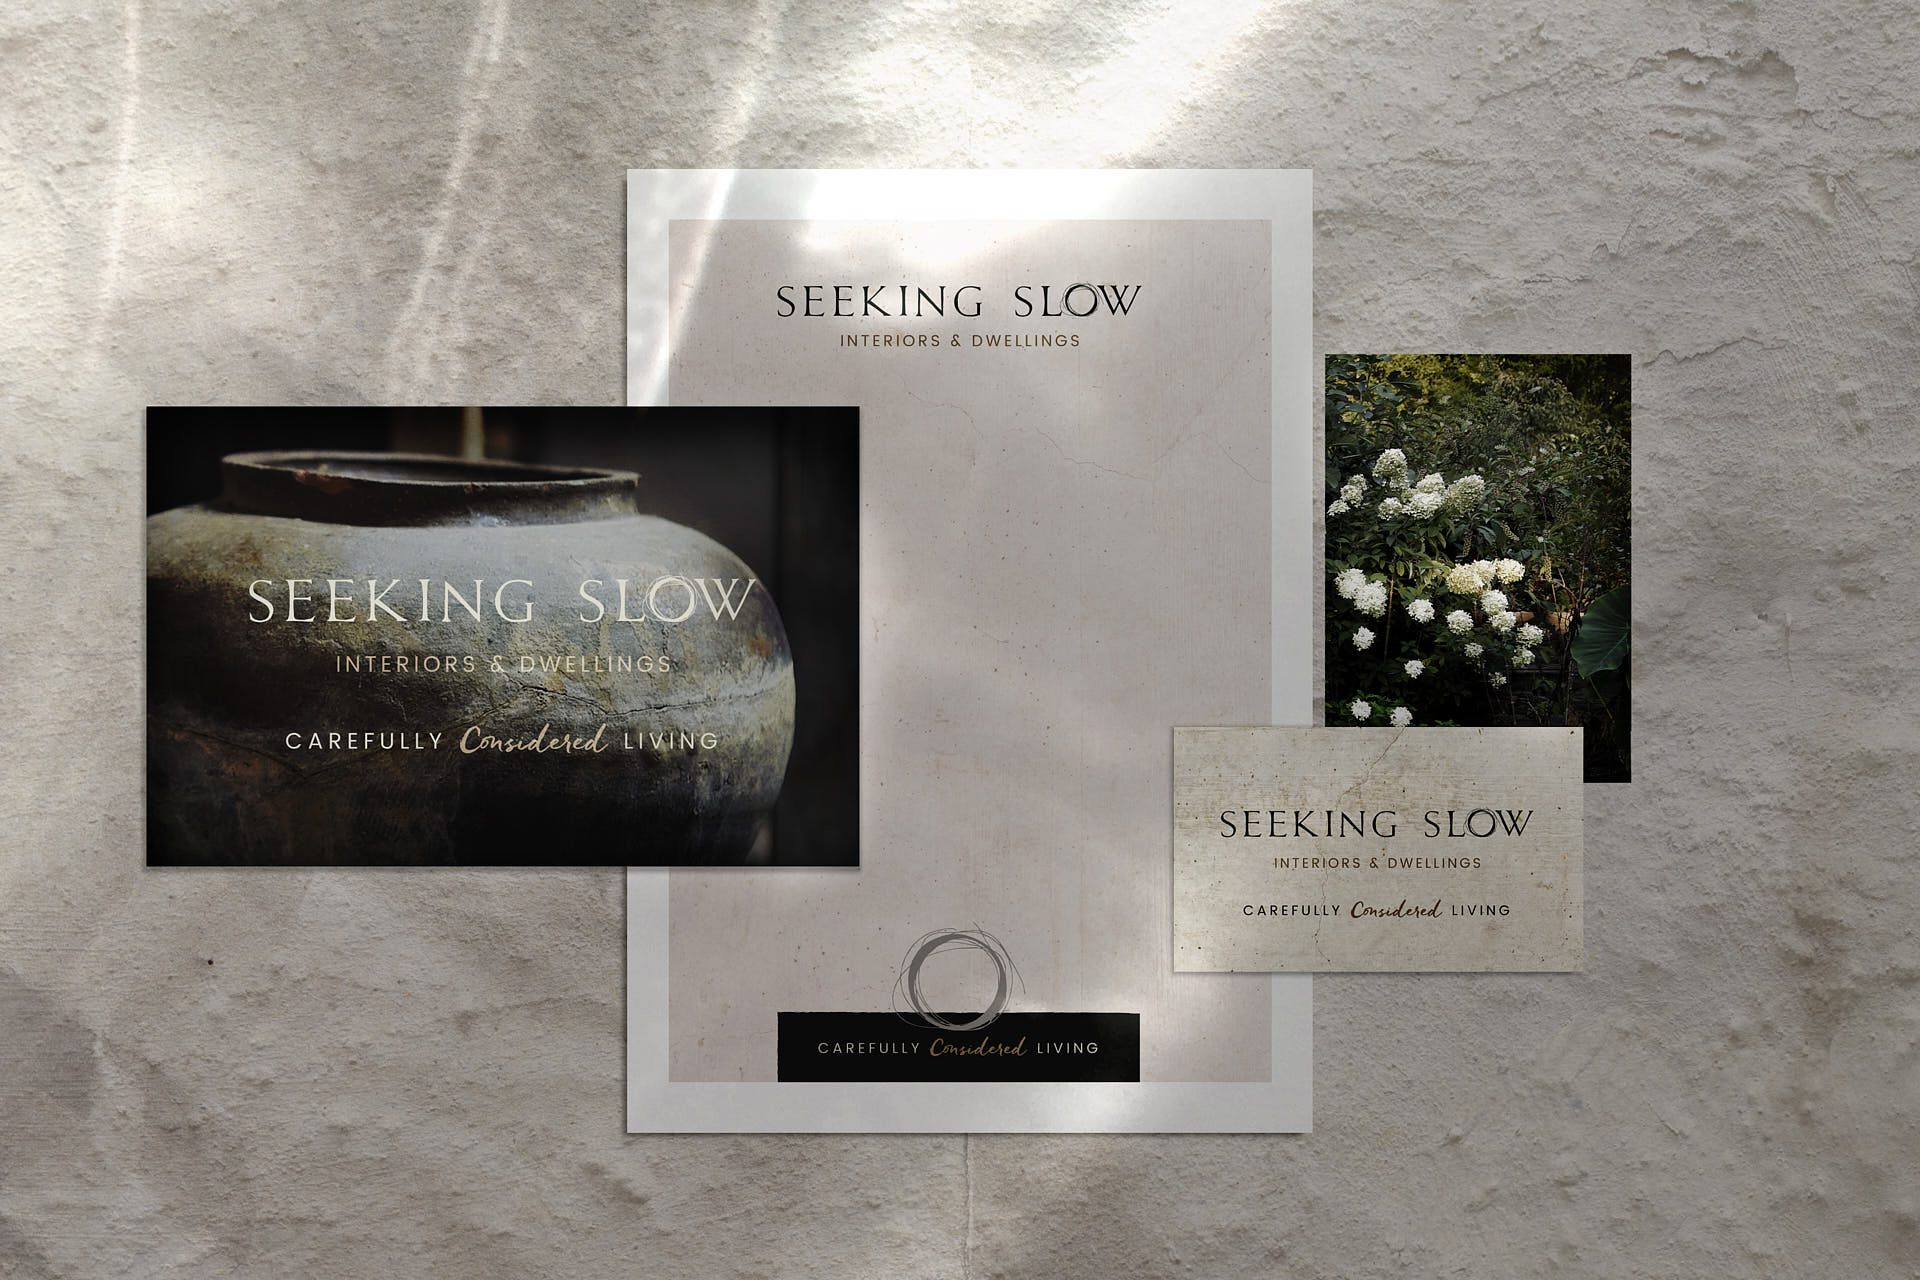 branding & print materials for seeking-slow. Rebecca Snyder, graphic designer, owner A LA MODE designs.